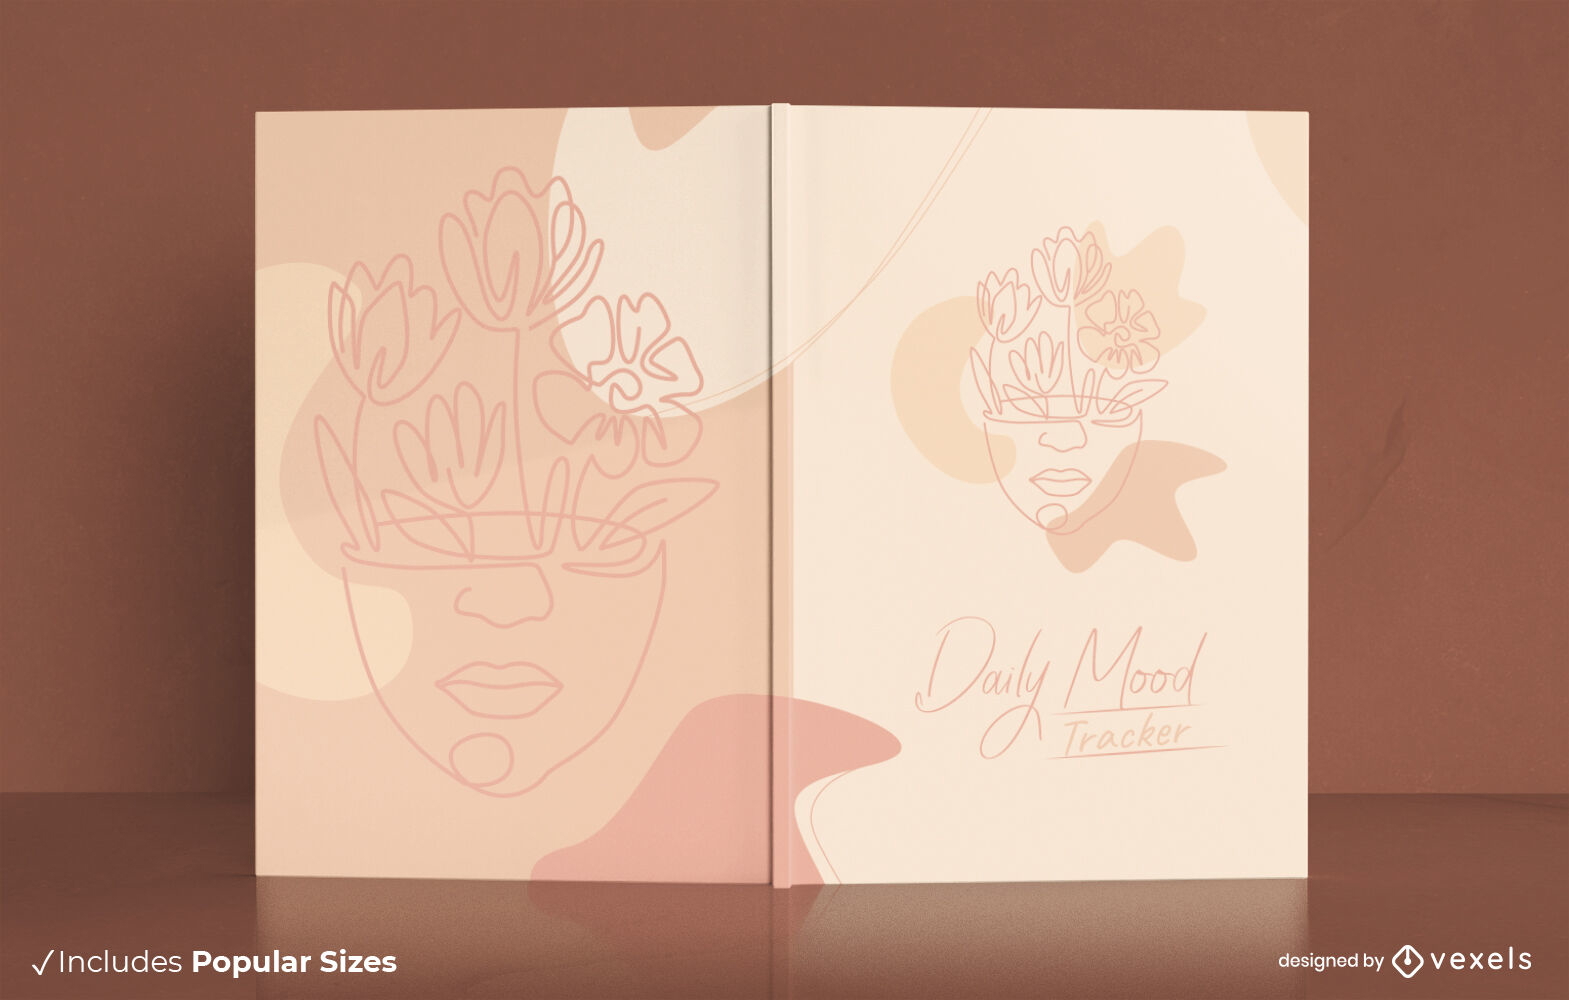 Floral mood tracker book cover design